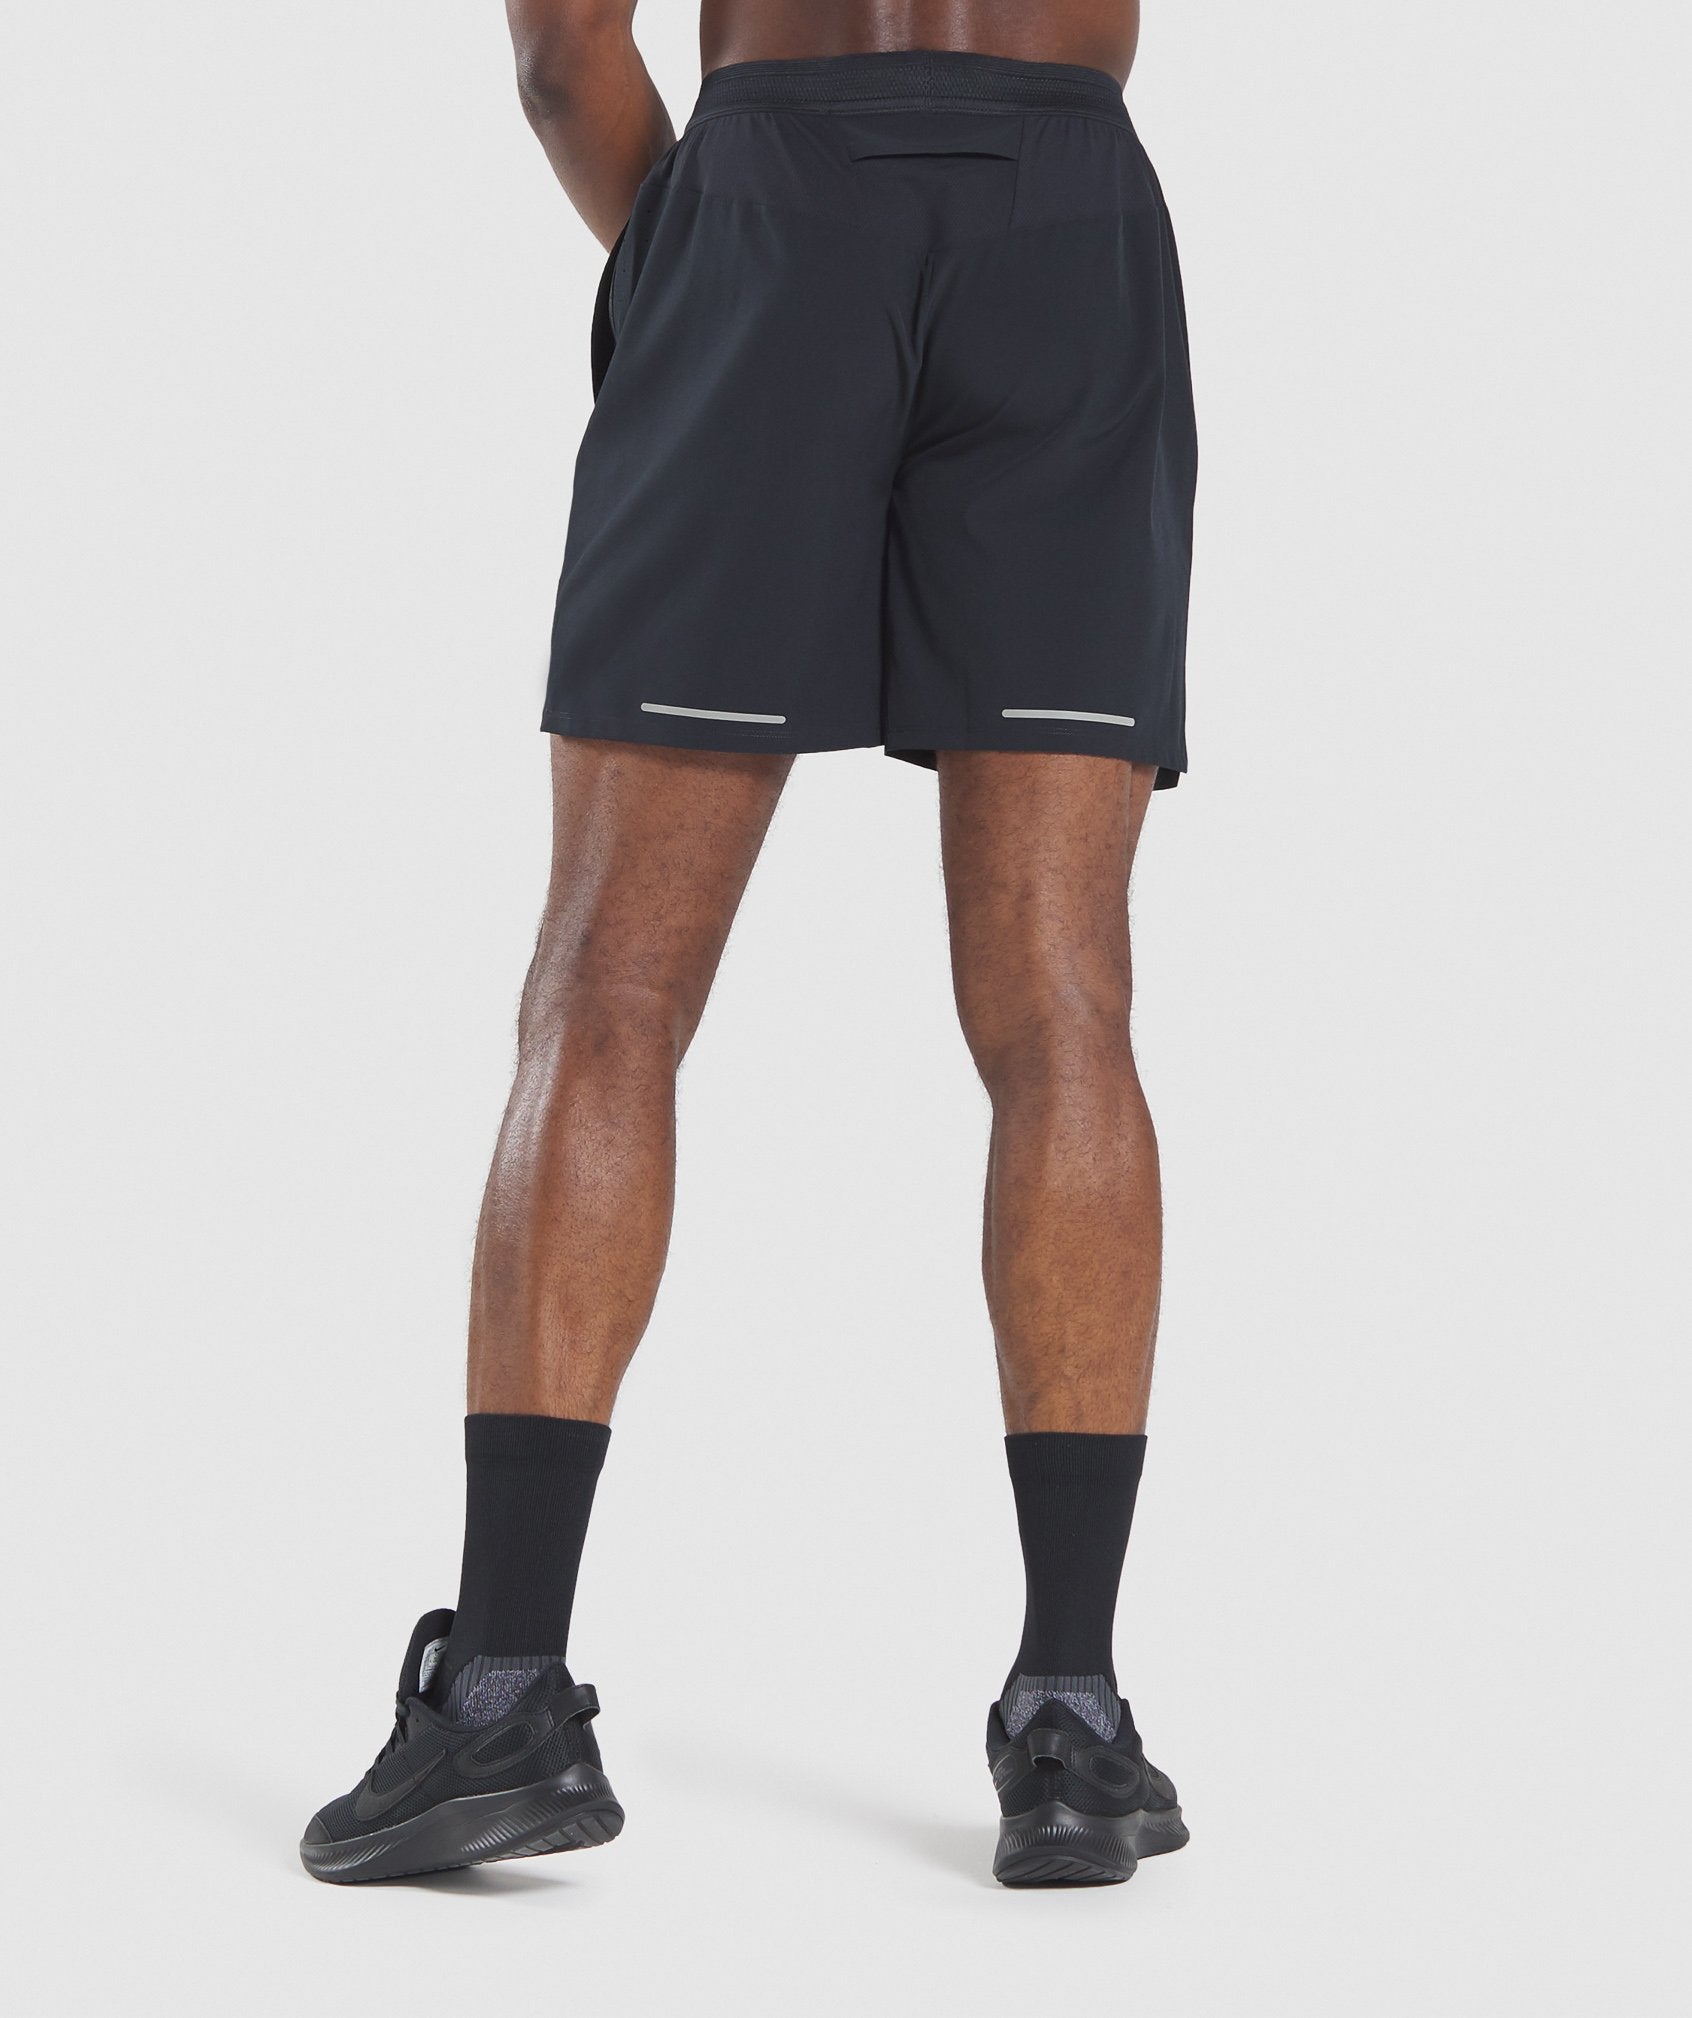 Speed 7" Shorts in Black